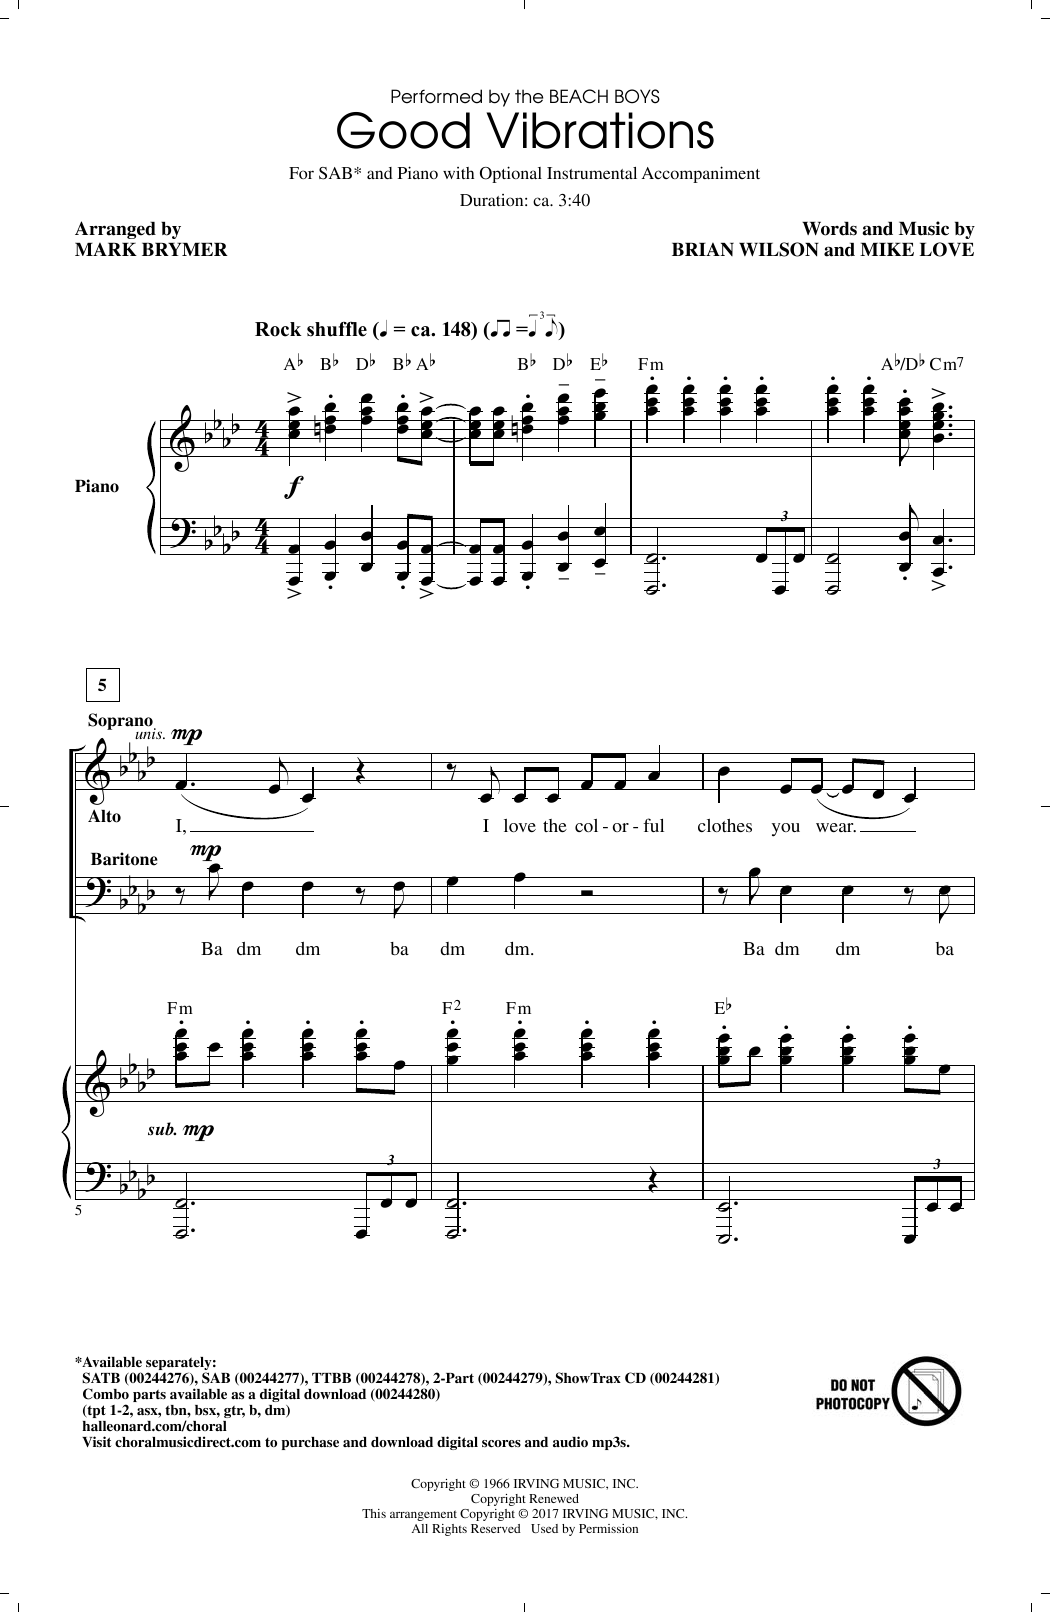 Mark Brymer Good Vibrations sheet music notes and chords arranged for SAB Choir